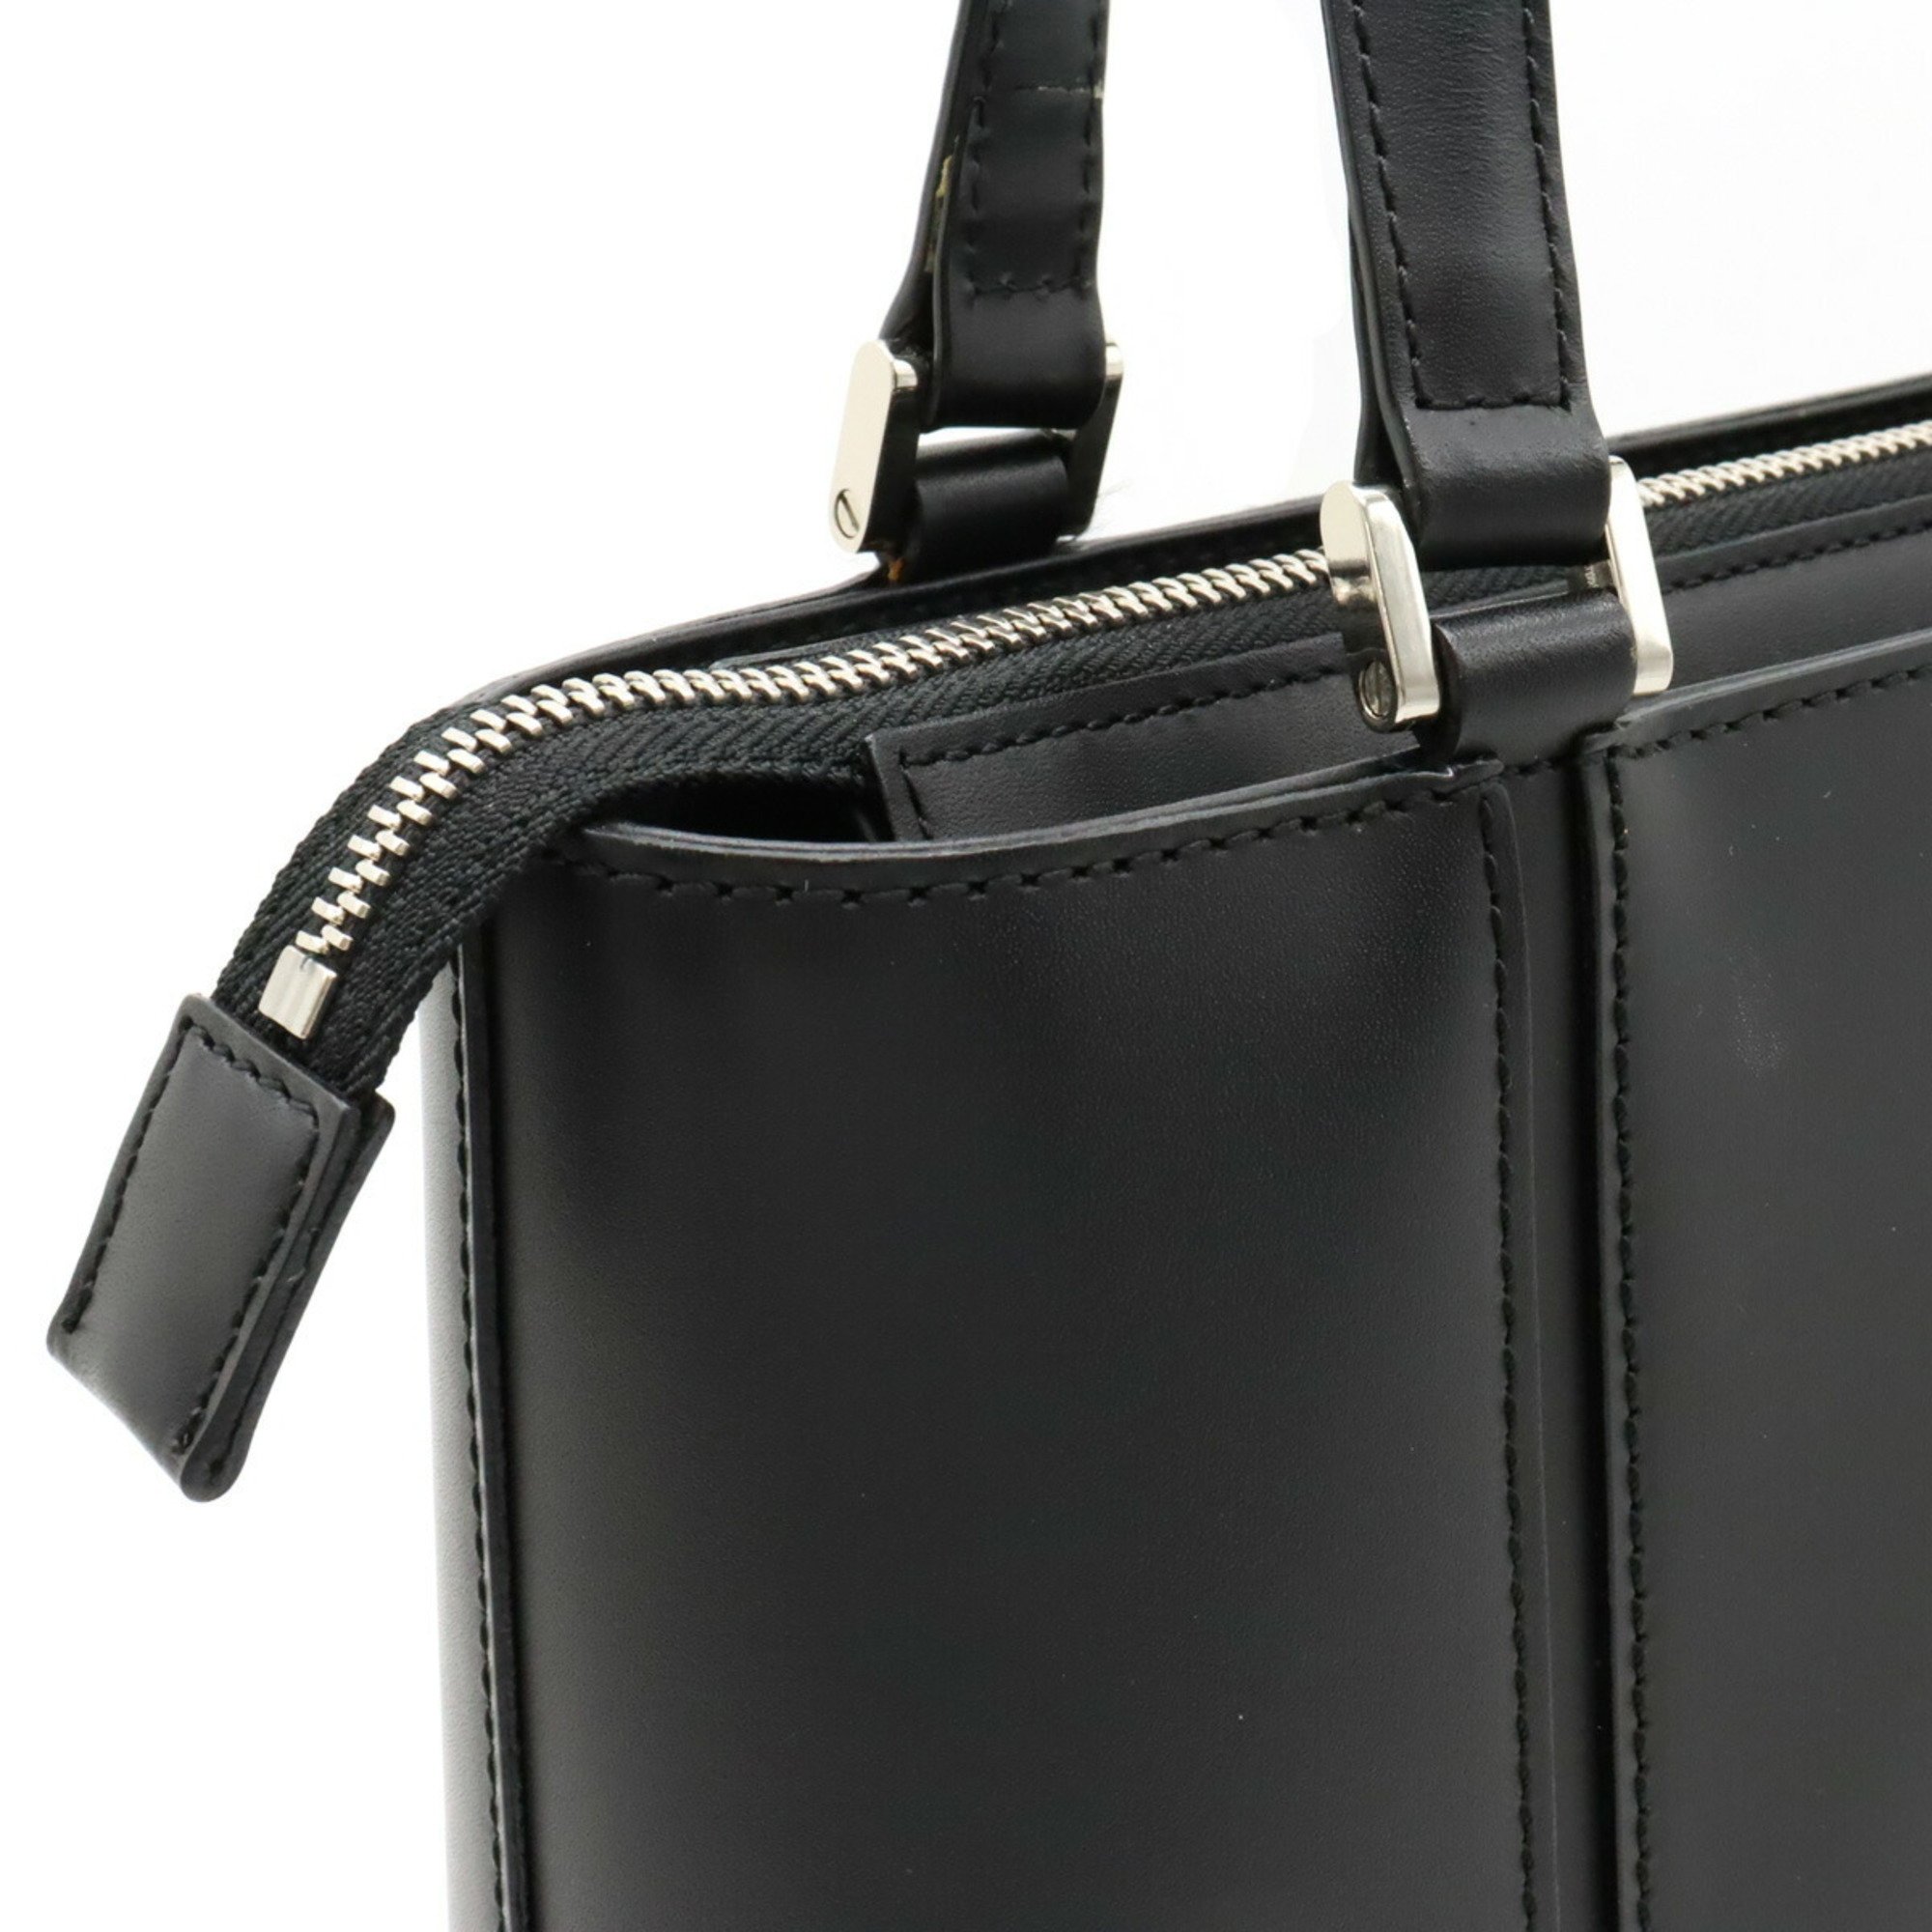 BURBERRY Tote bag, handbag, leather, black